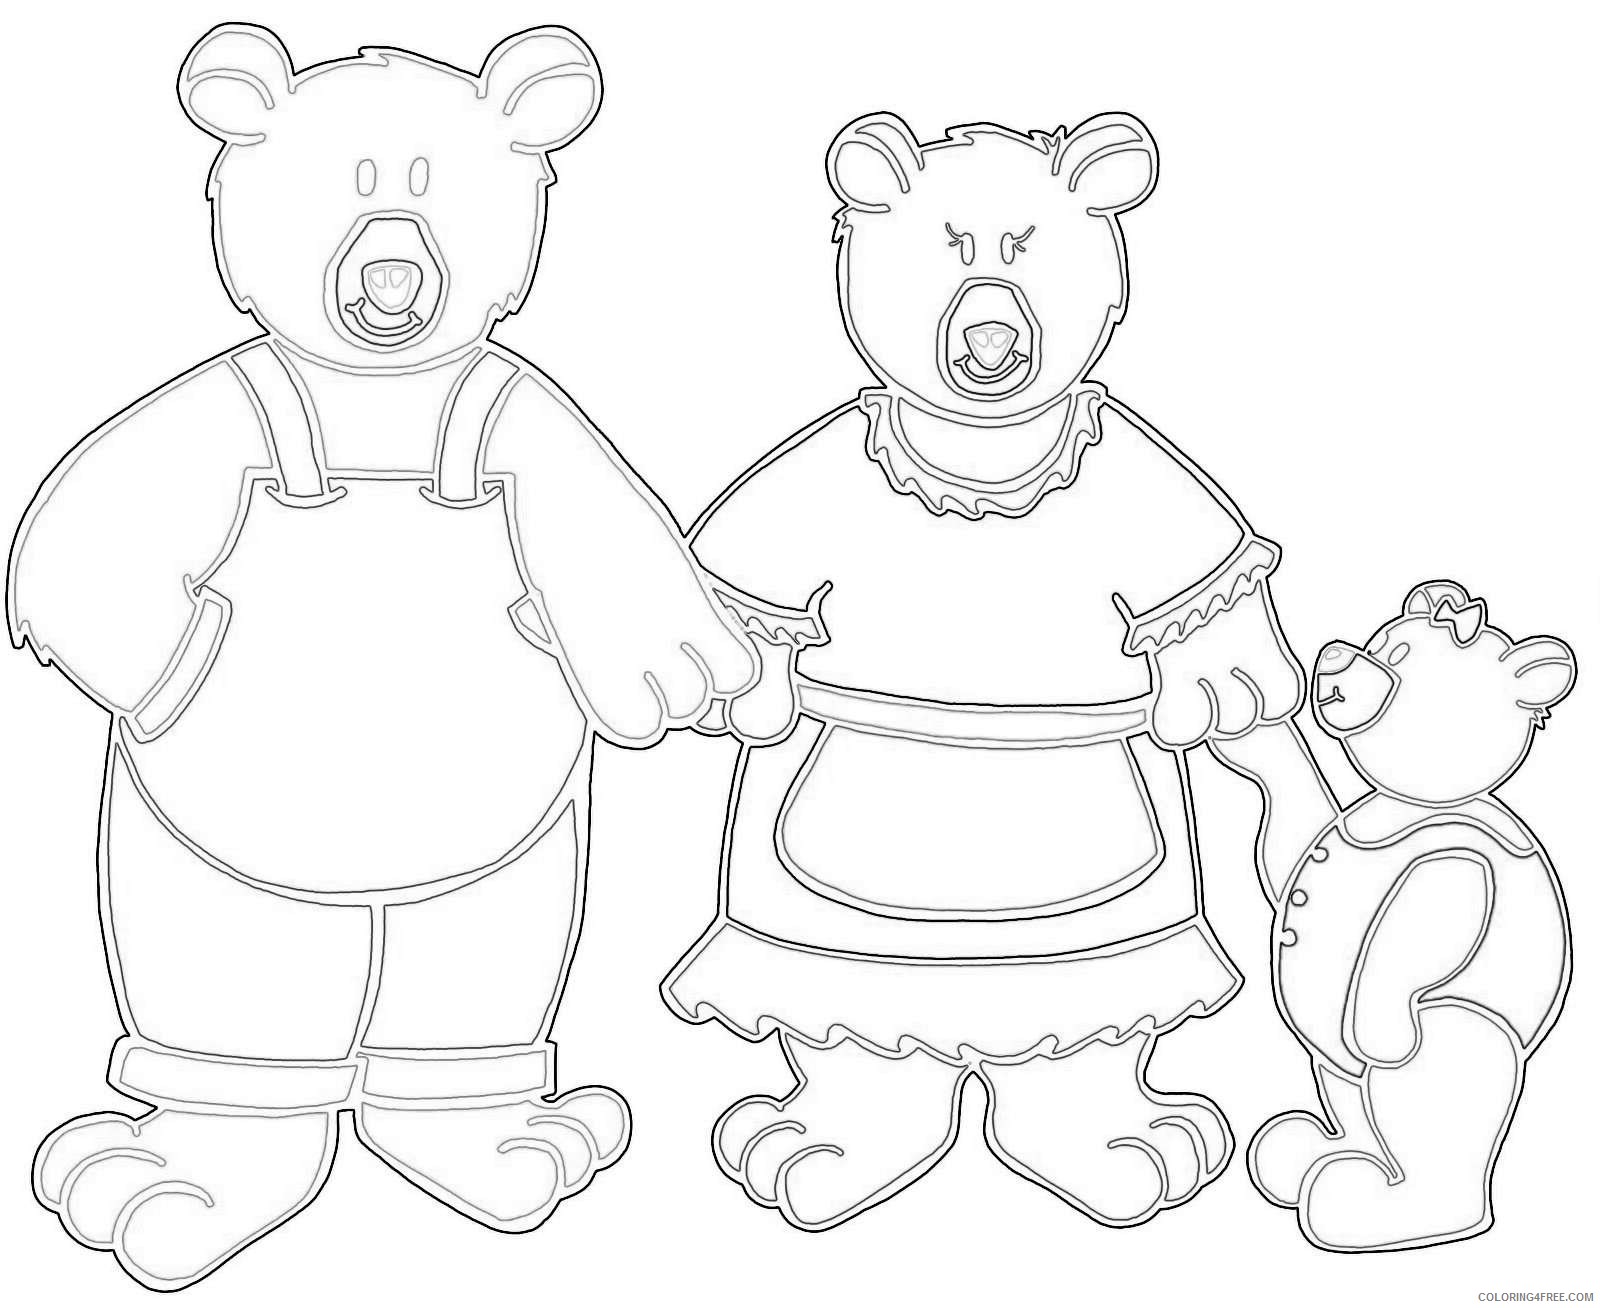 goldilocks-and-the-three-bears-co-9smbts-coloring-coloring4free